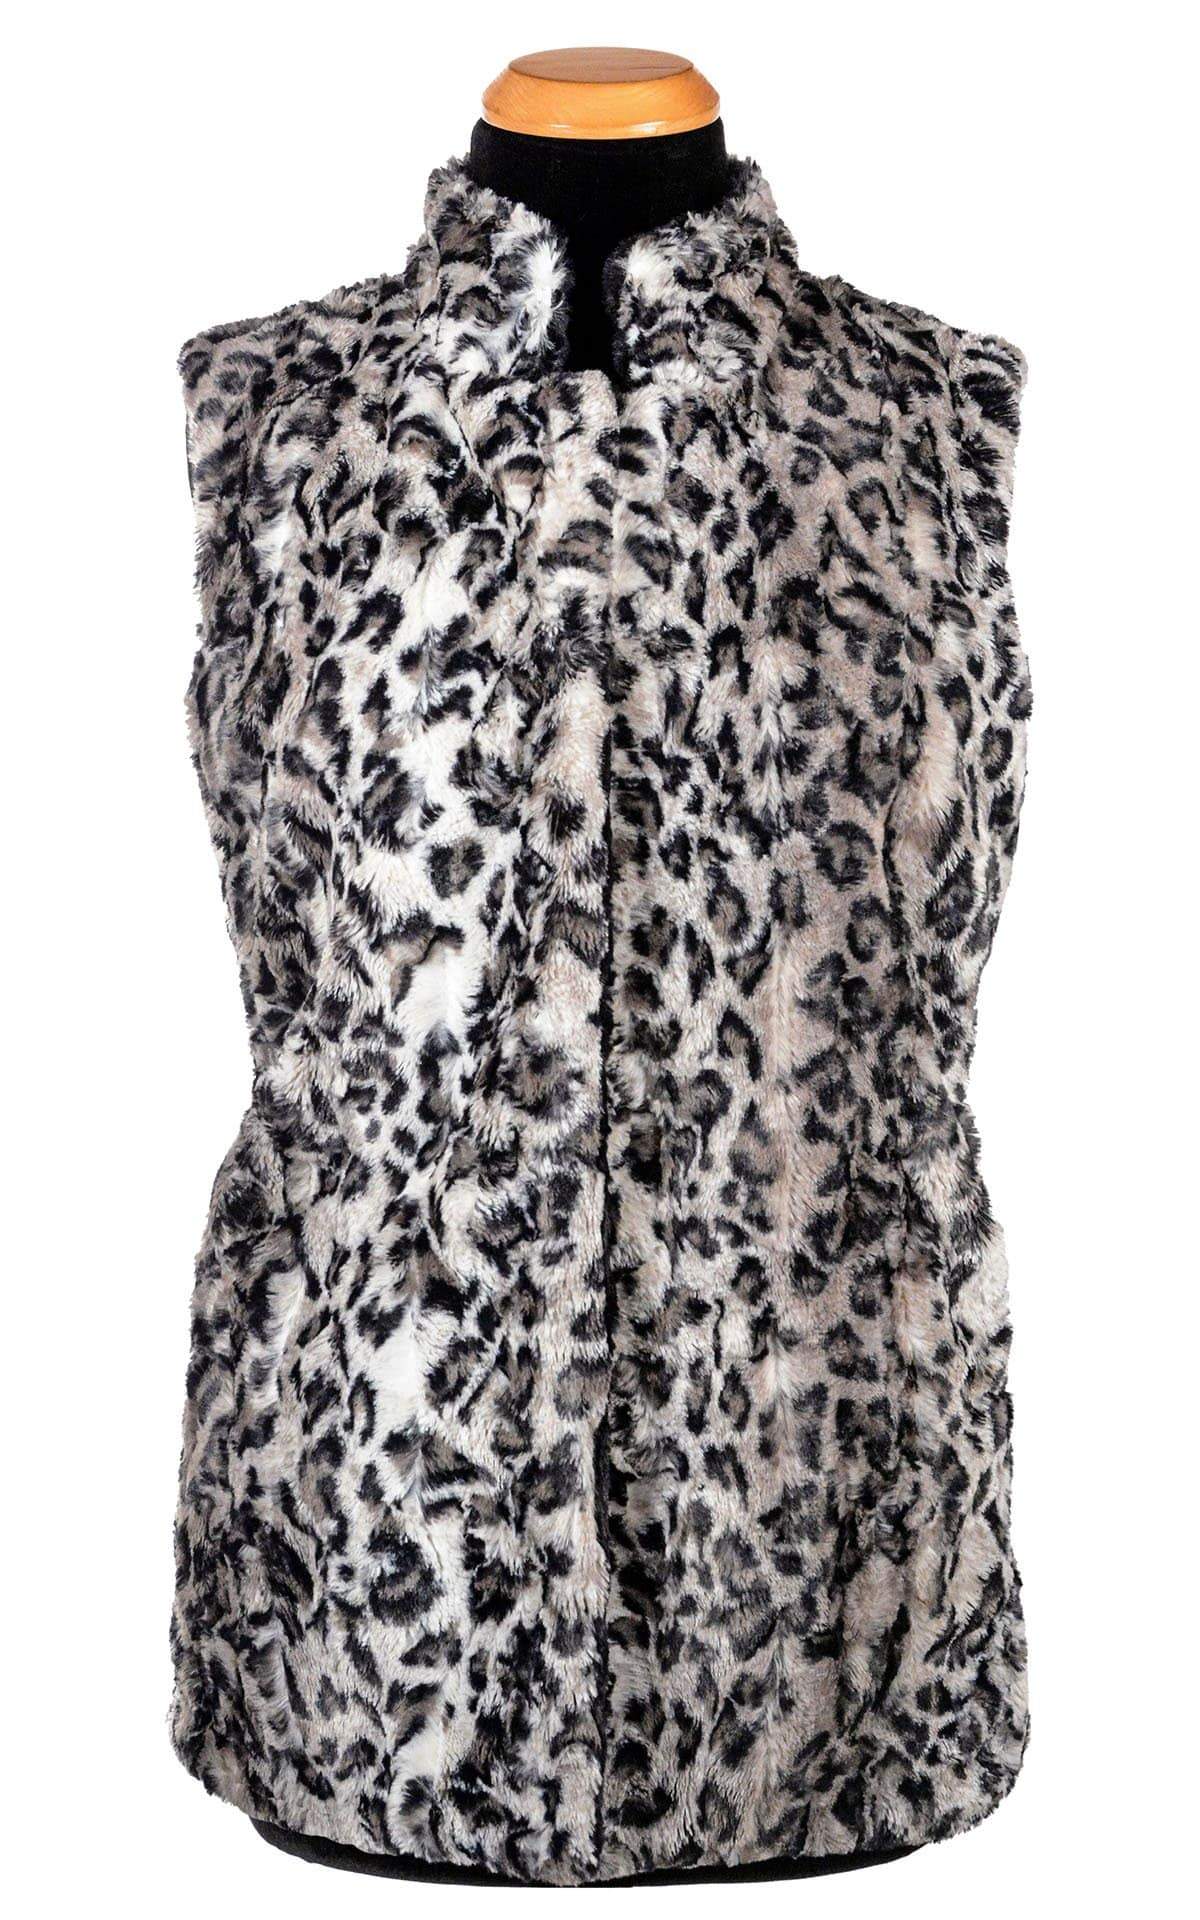 Mandarin Vest Short | Savannah Cat in Gray Animal Print and Cuddly Black Faux Fur | Reversible | Handmade in Seattle WA | Pandemonium Millinery